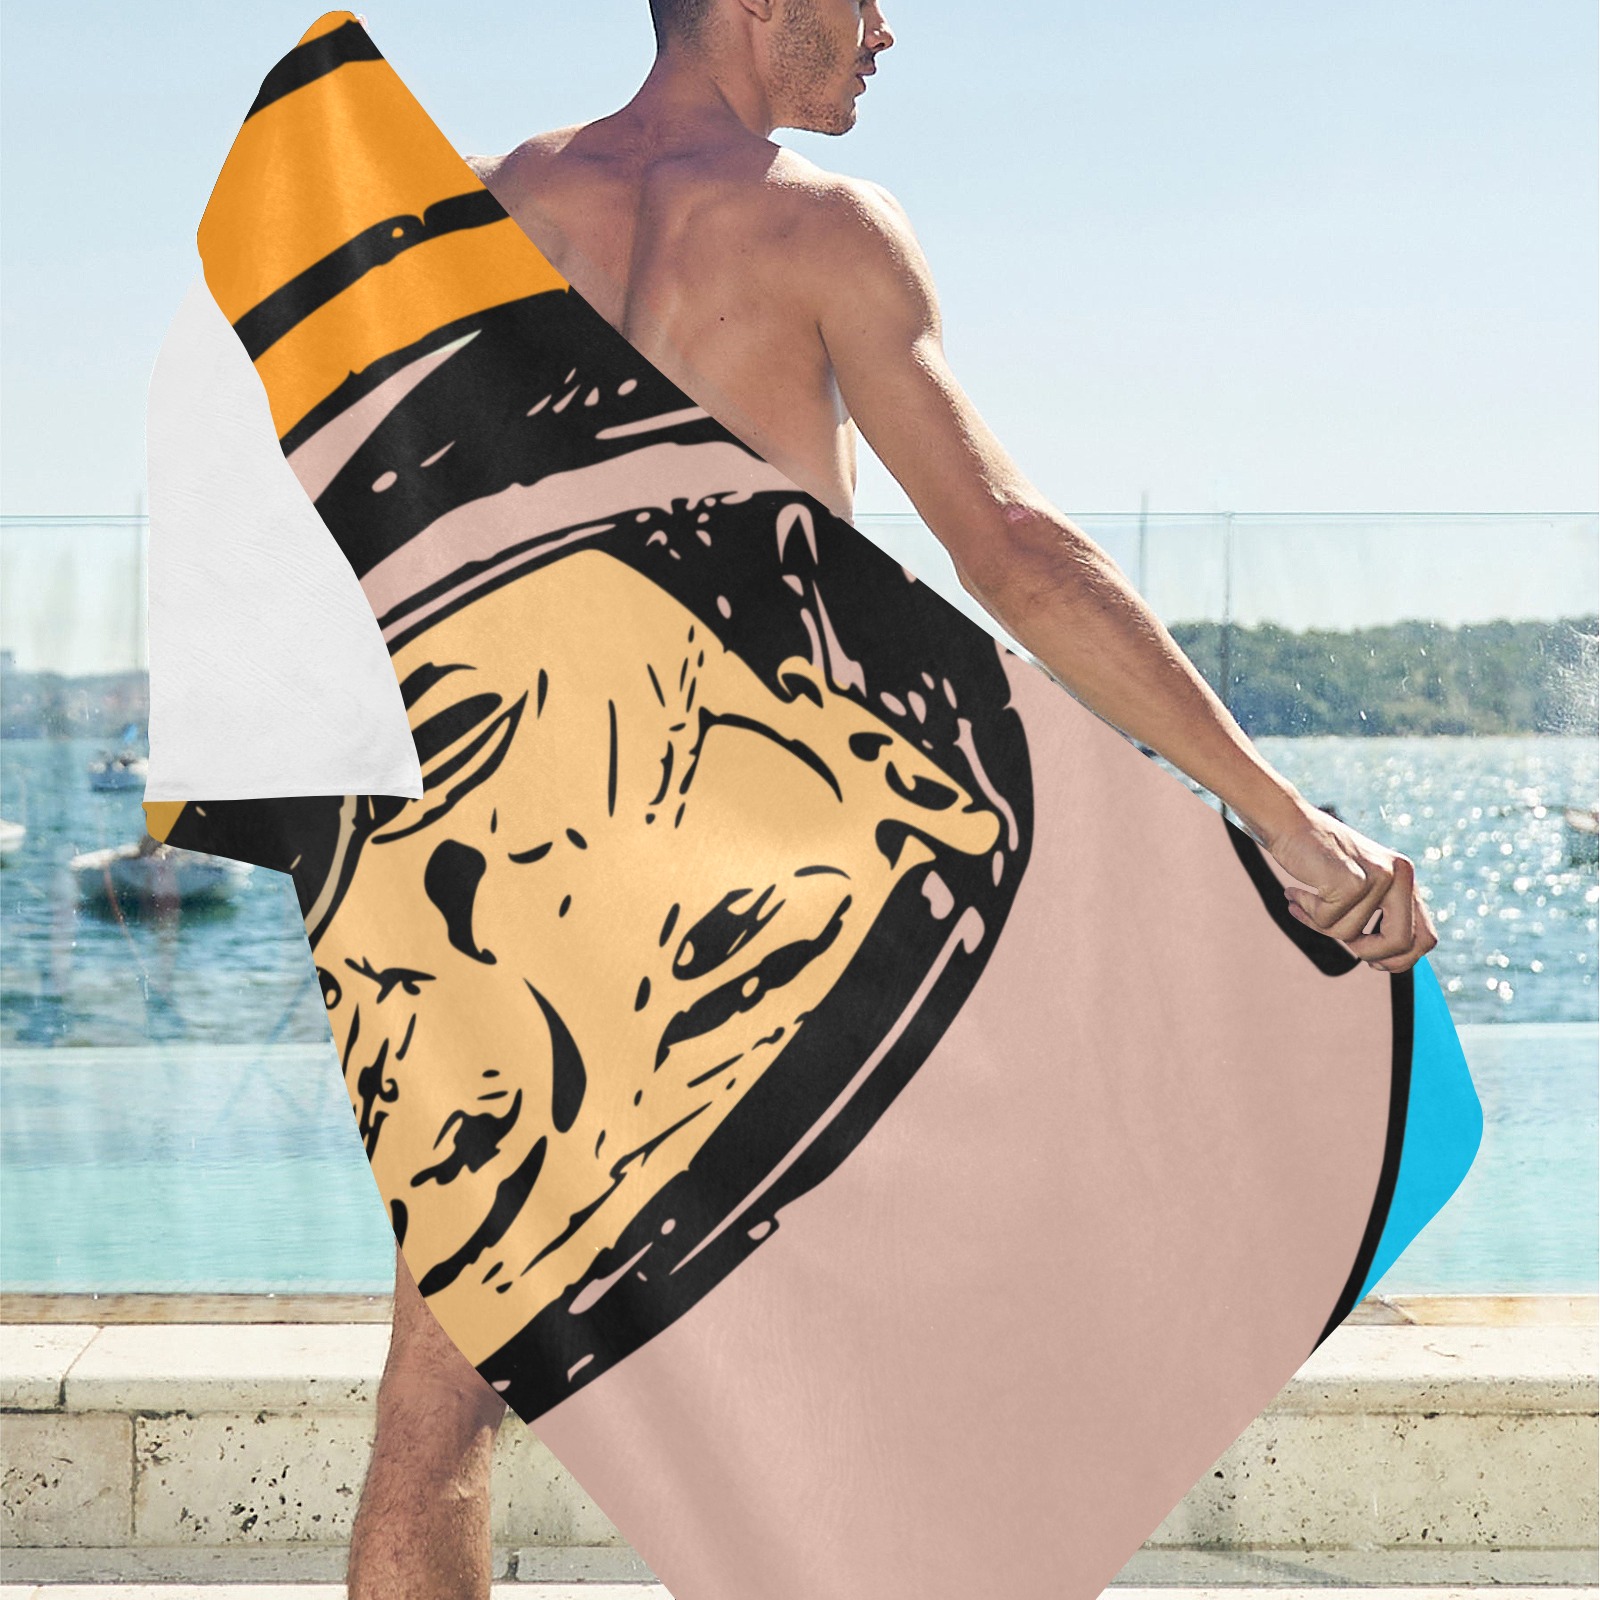 astronaut Beach Towel 30"x 60"